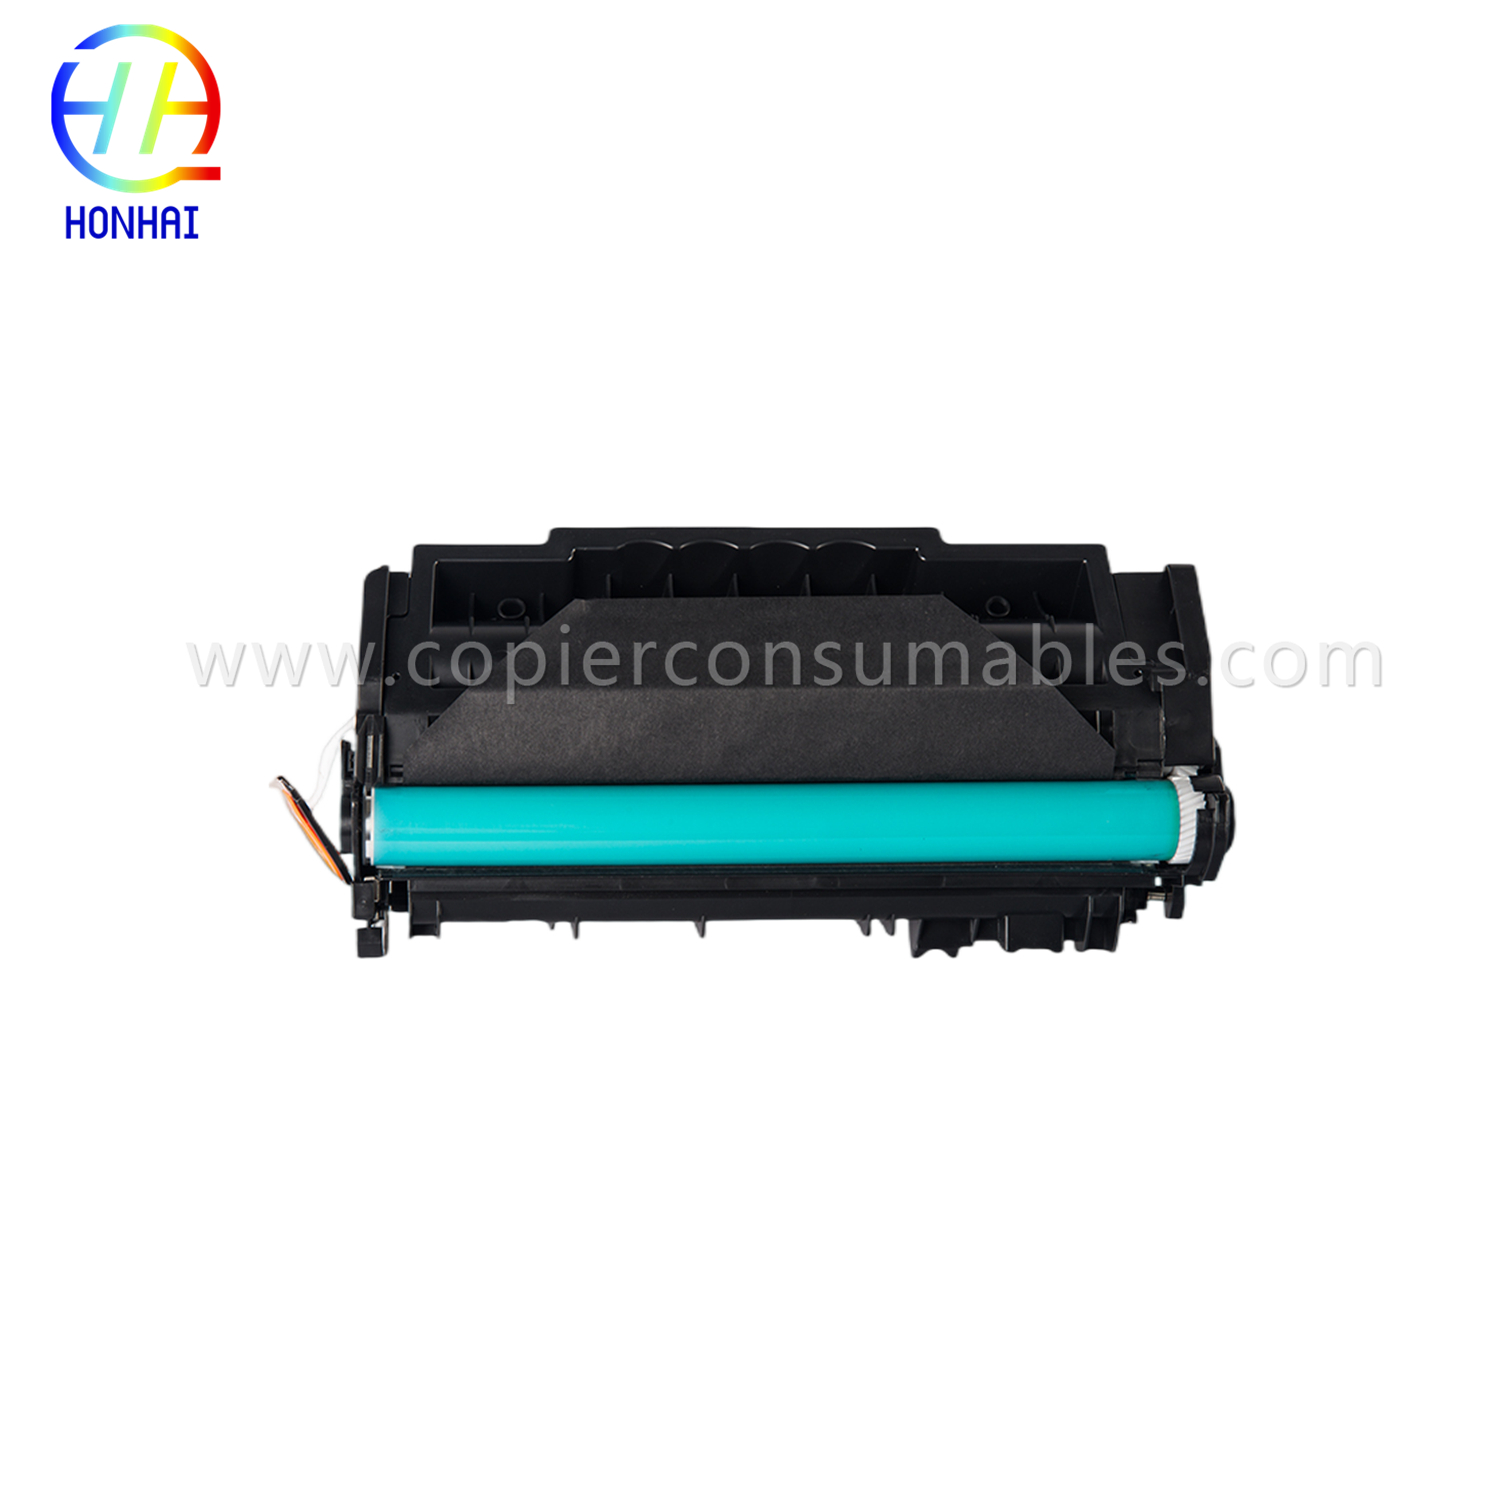 Toner Cartridge for HP Laserjet 1160 1320 (Q5949A 49A) OEM